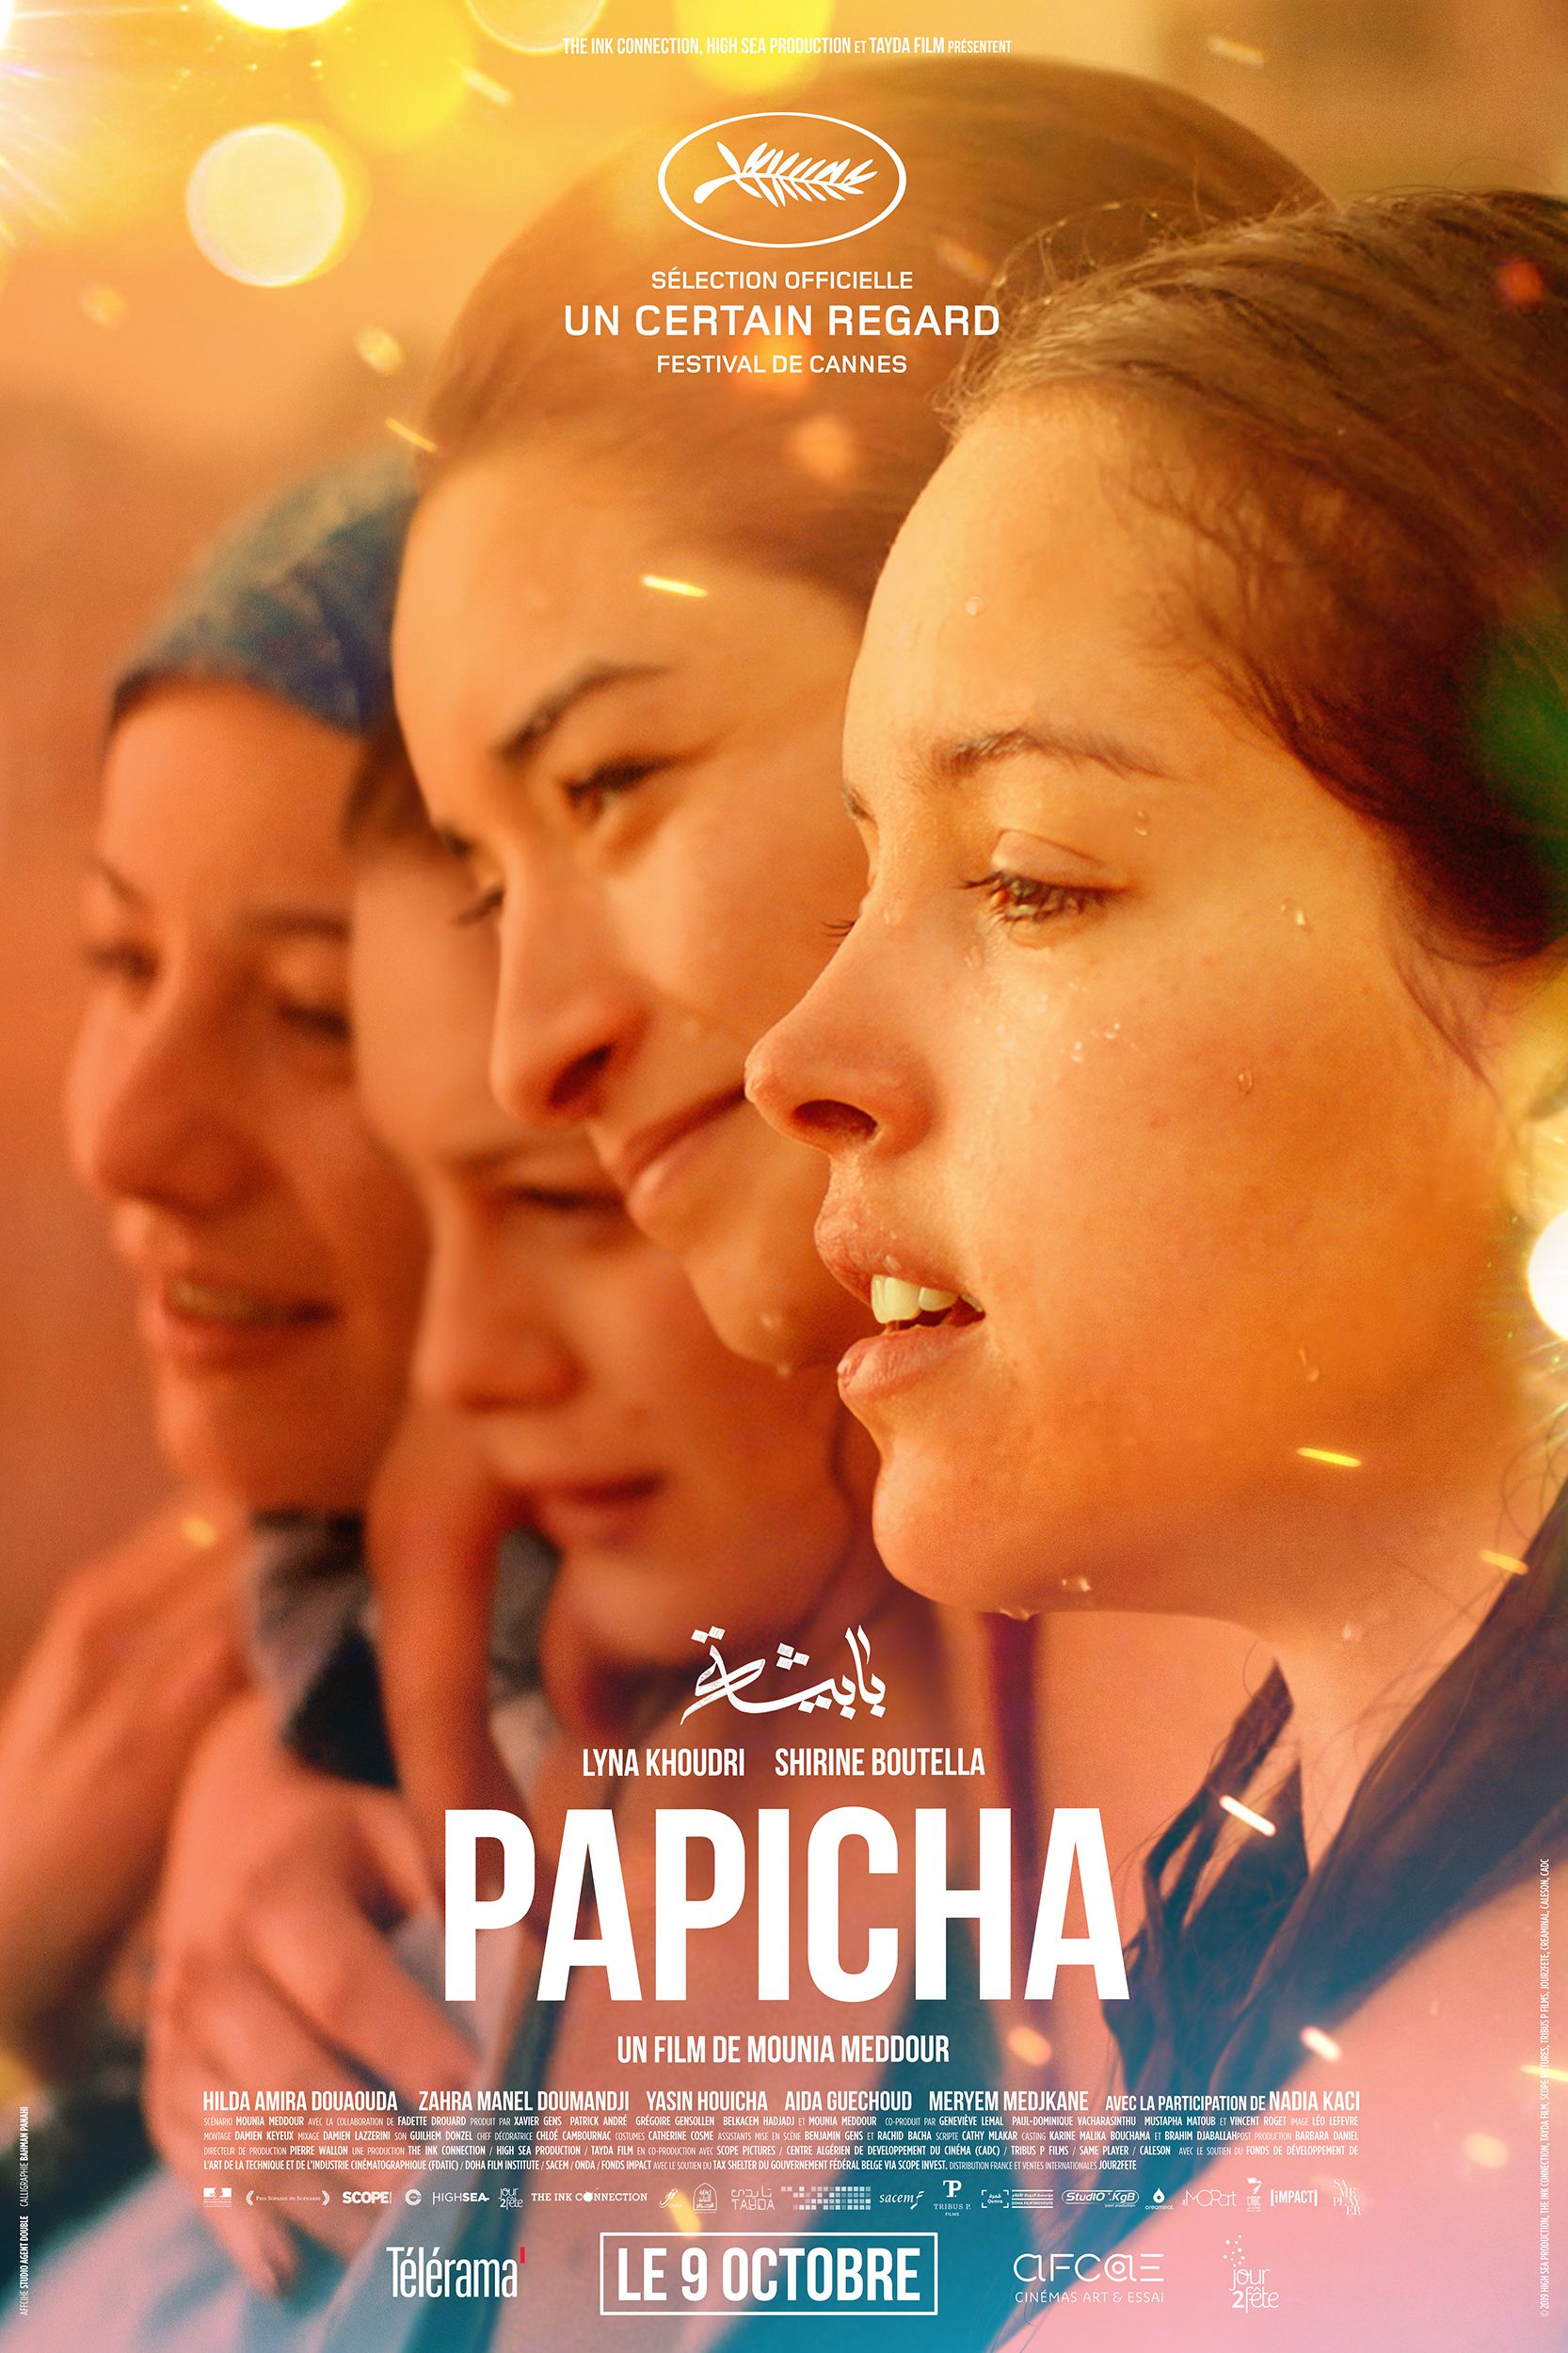 Papicha - Film (2019) streaming VF gratuit complet